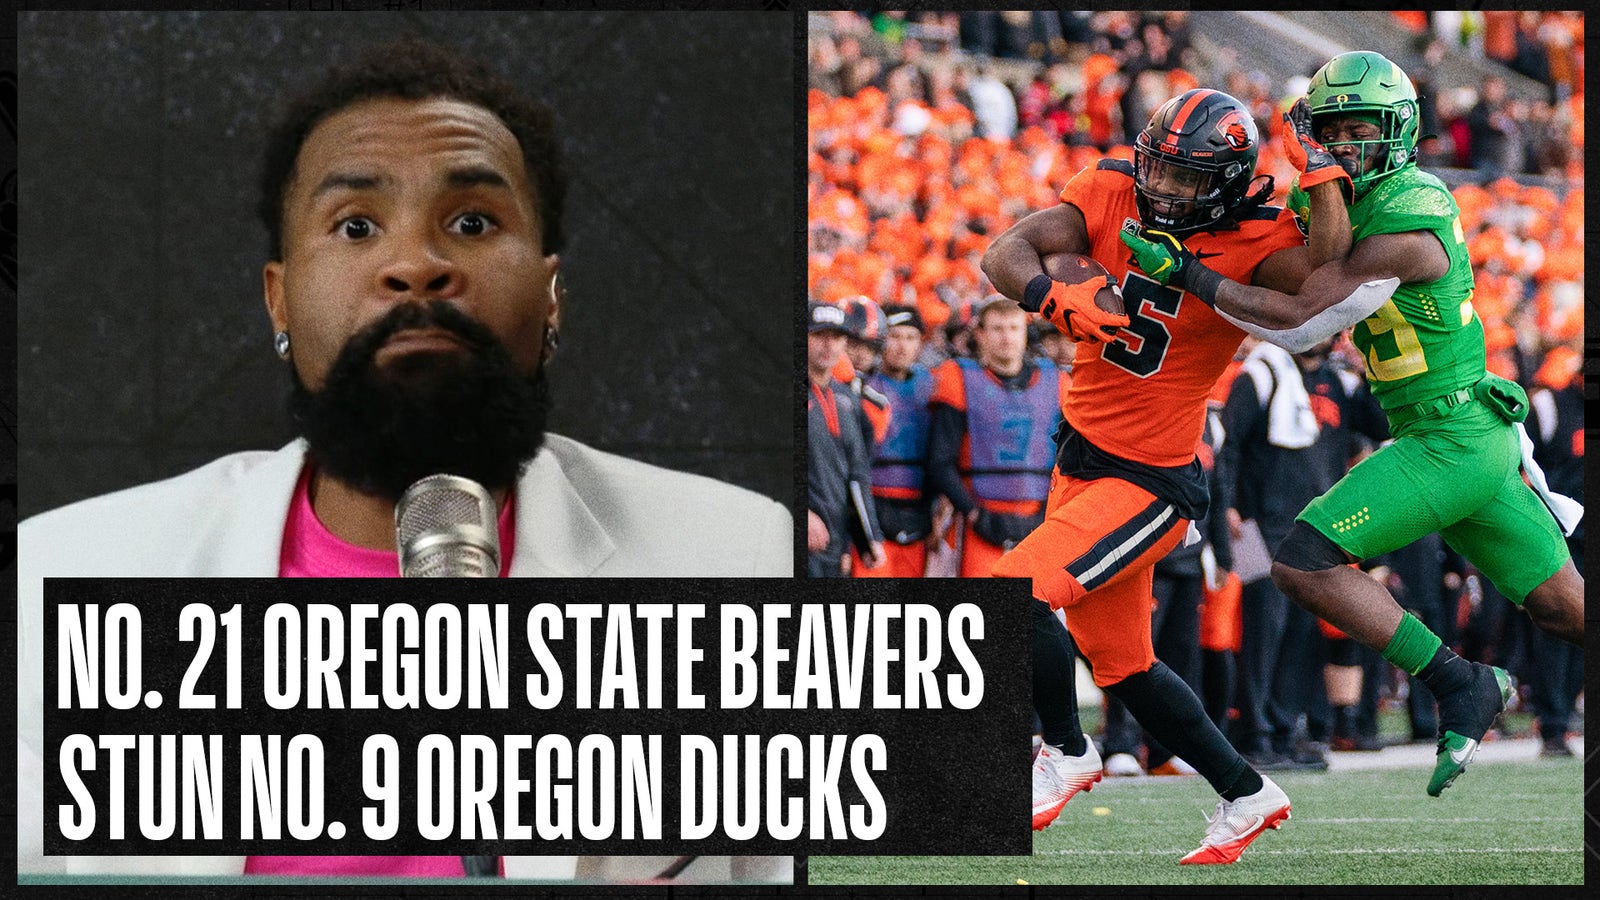 Oregon State stuns No. 9 Oregon